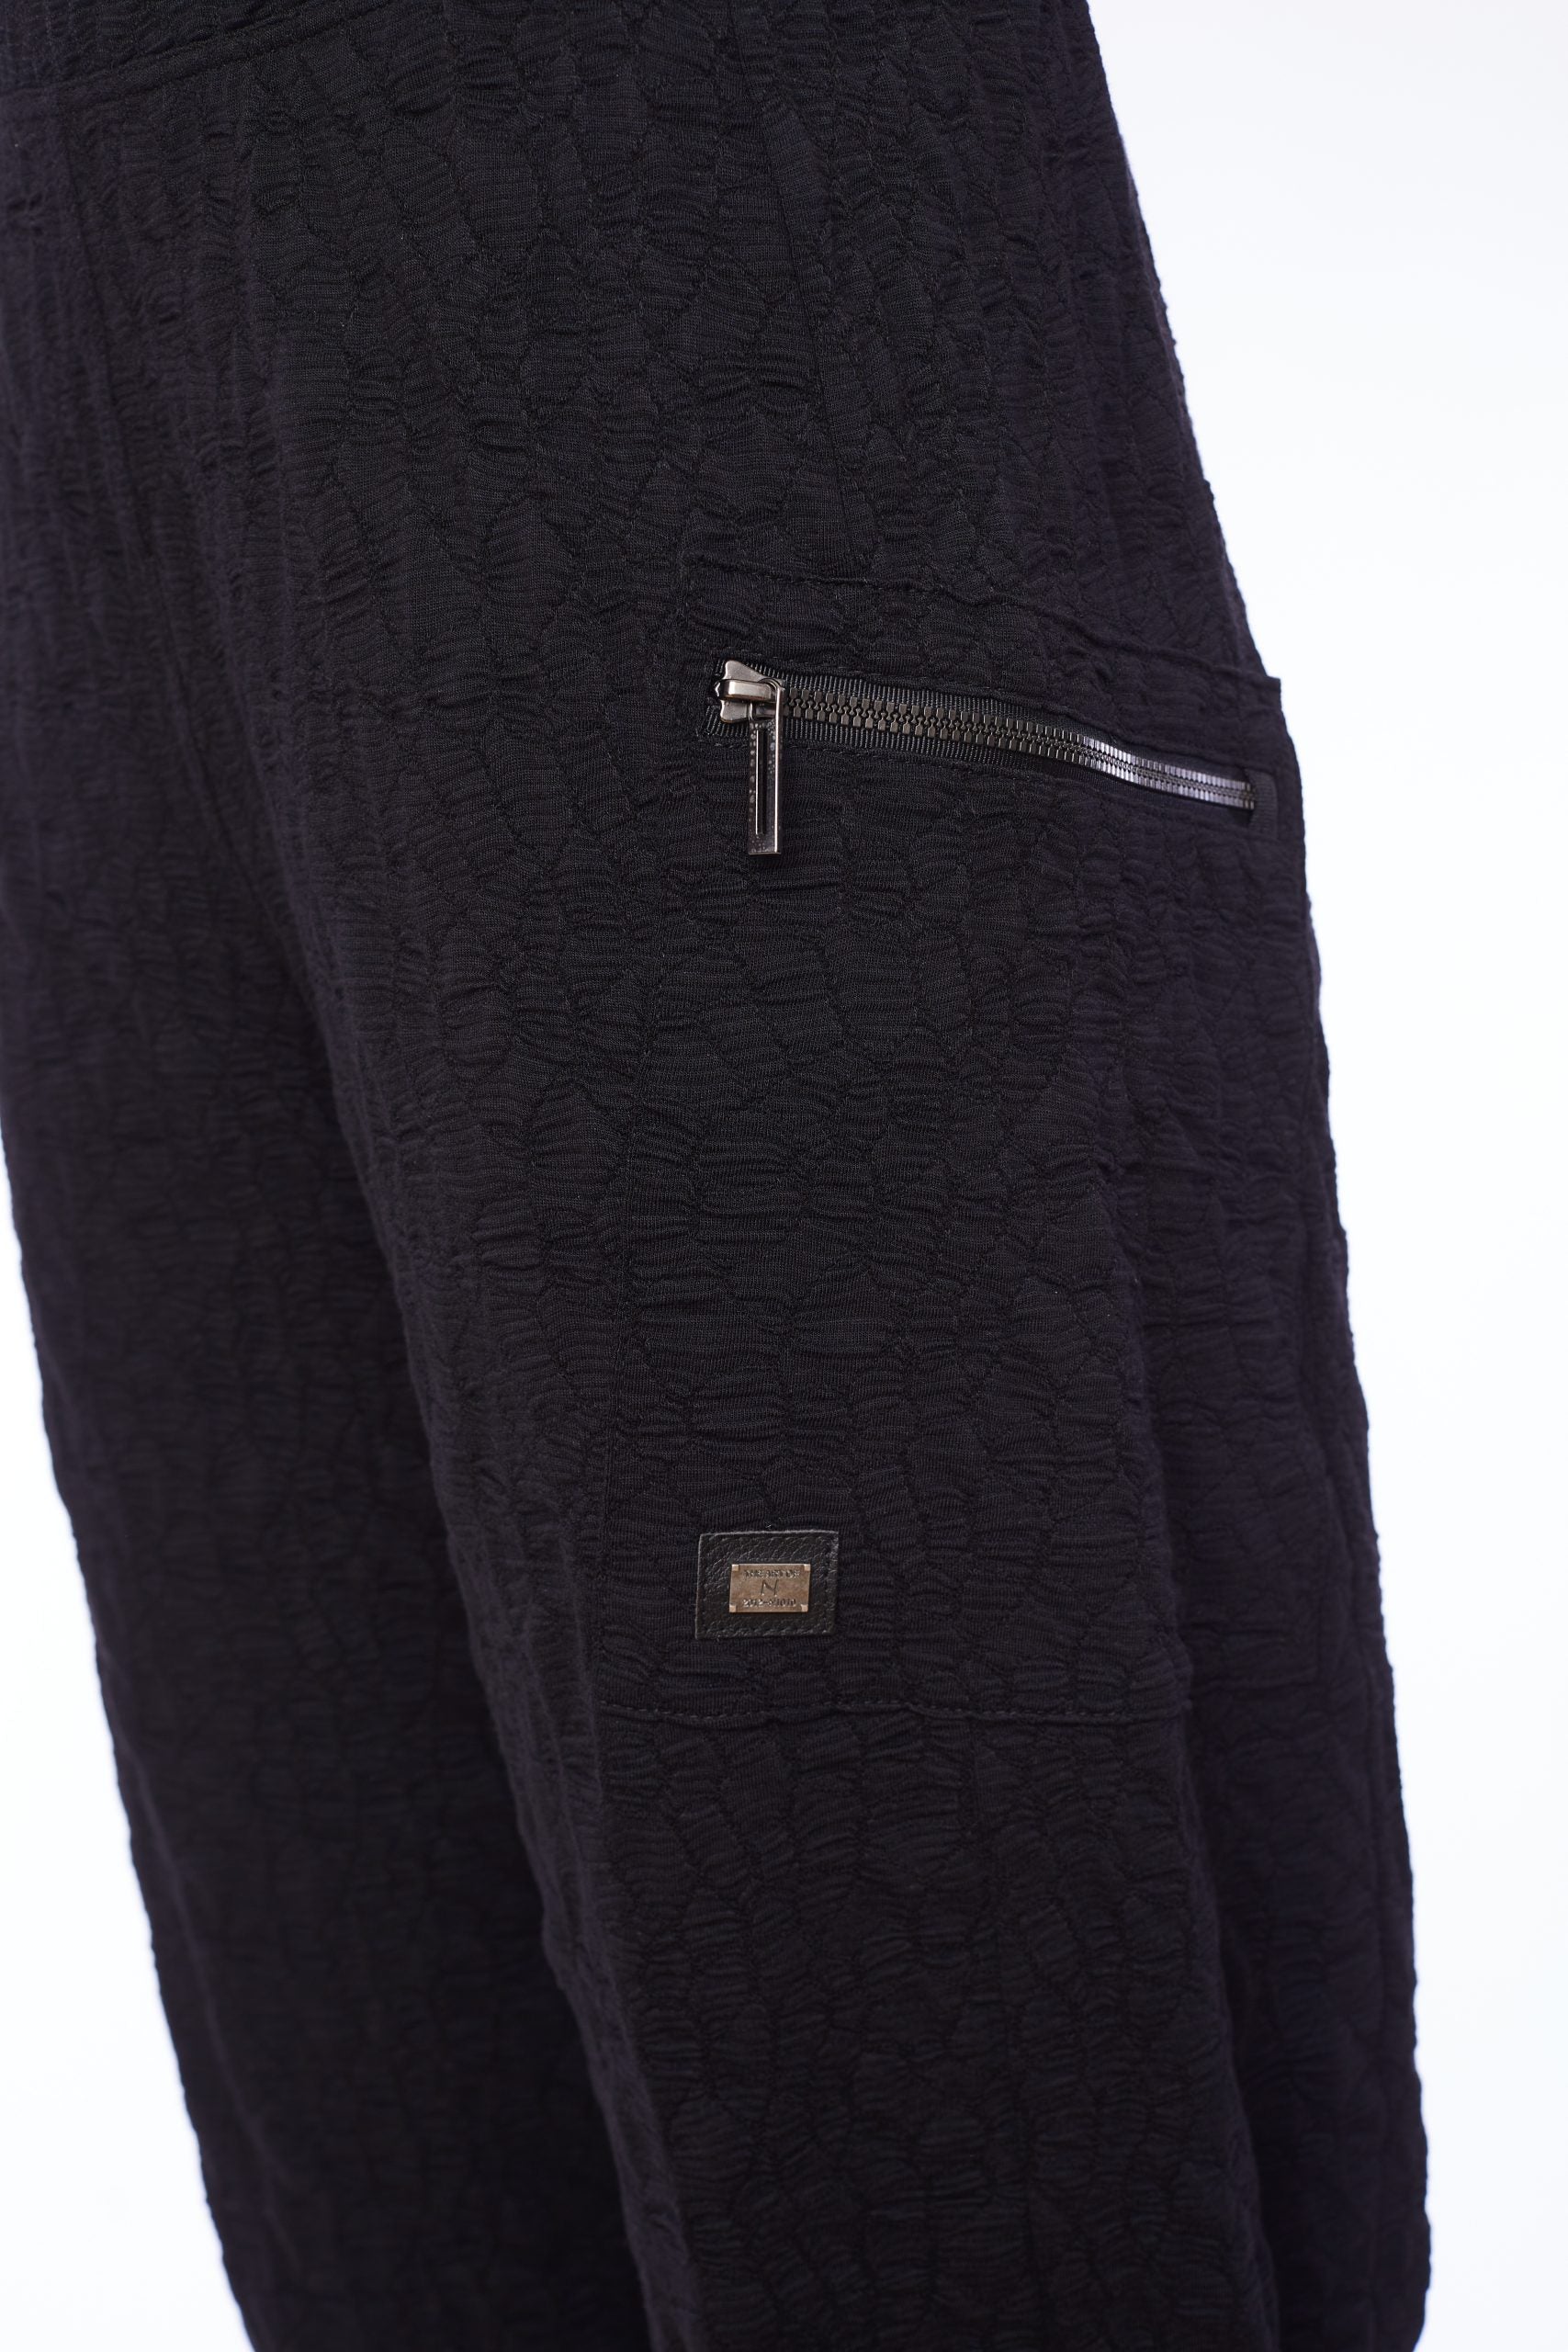 Zip Pocket Trouser/Cuff in Black